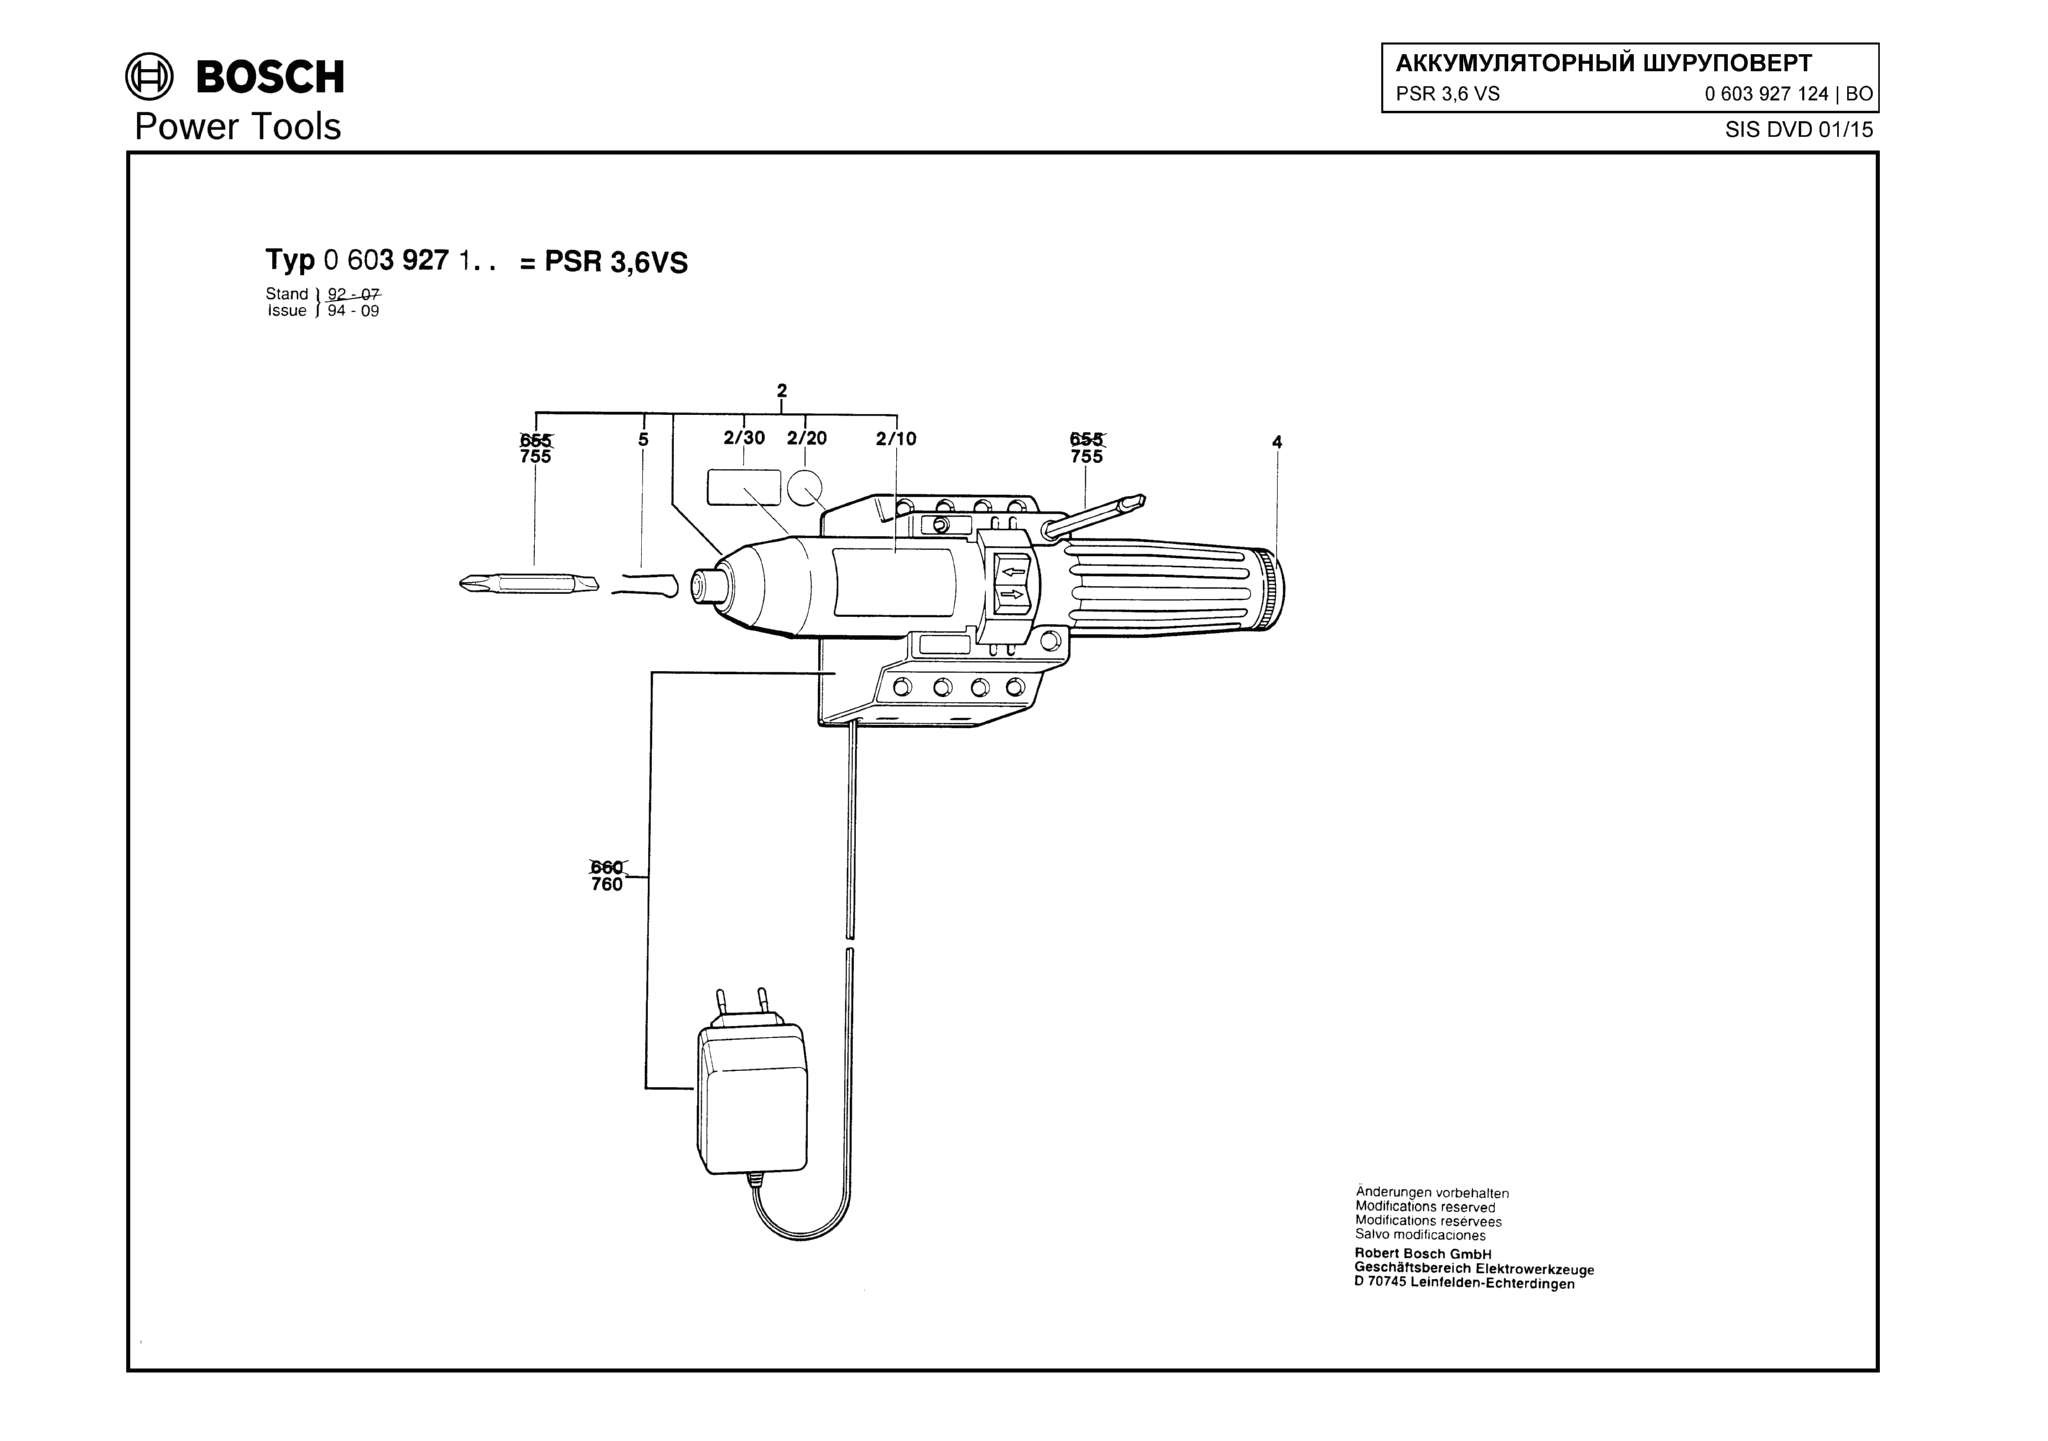 Запчасти, схема и деталировка Bosch PSR 3,6 VS (ТИП 0603927124)